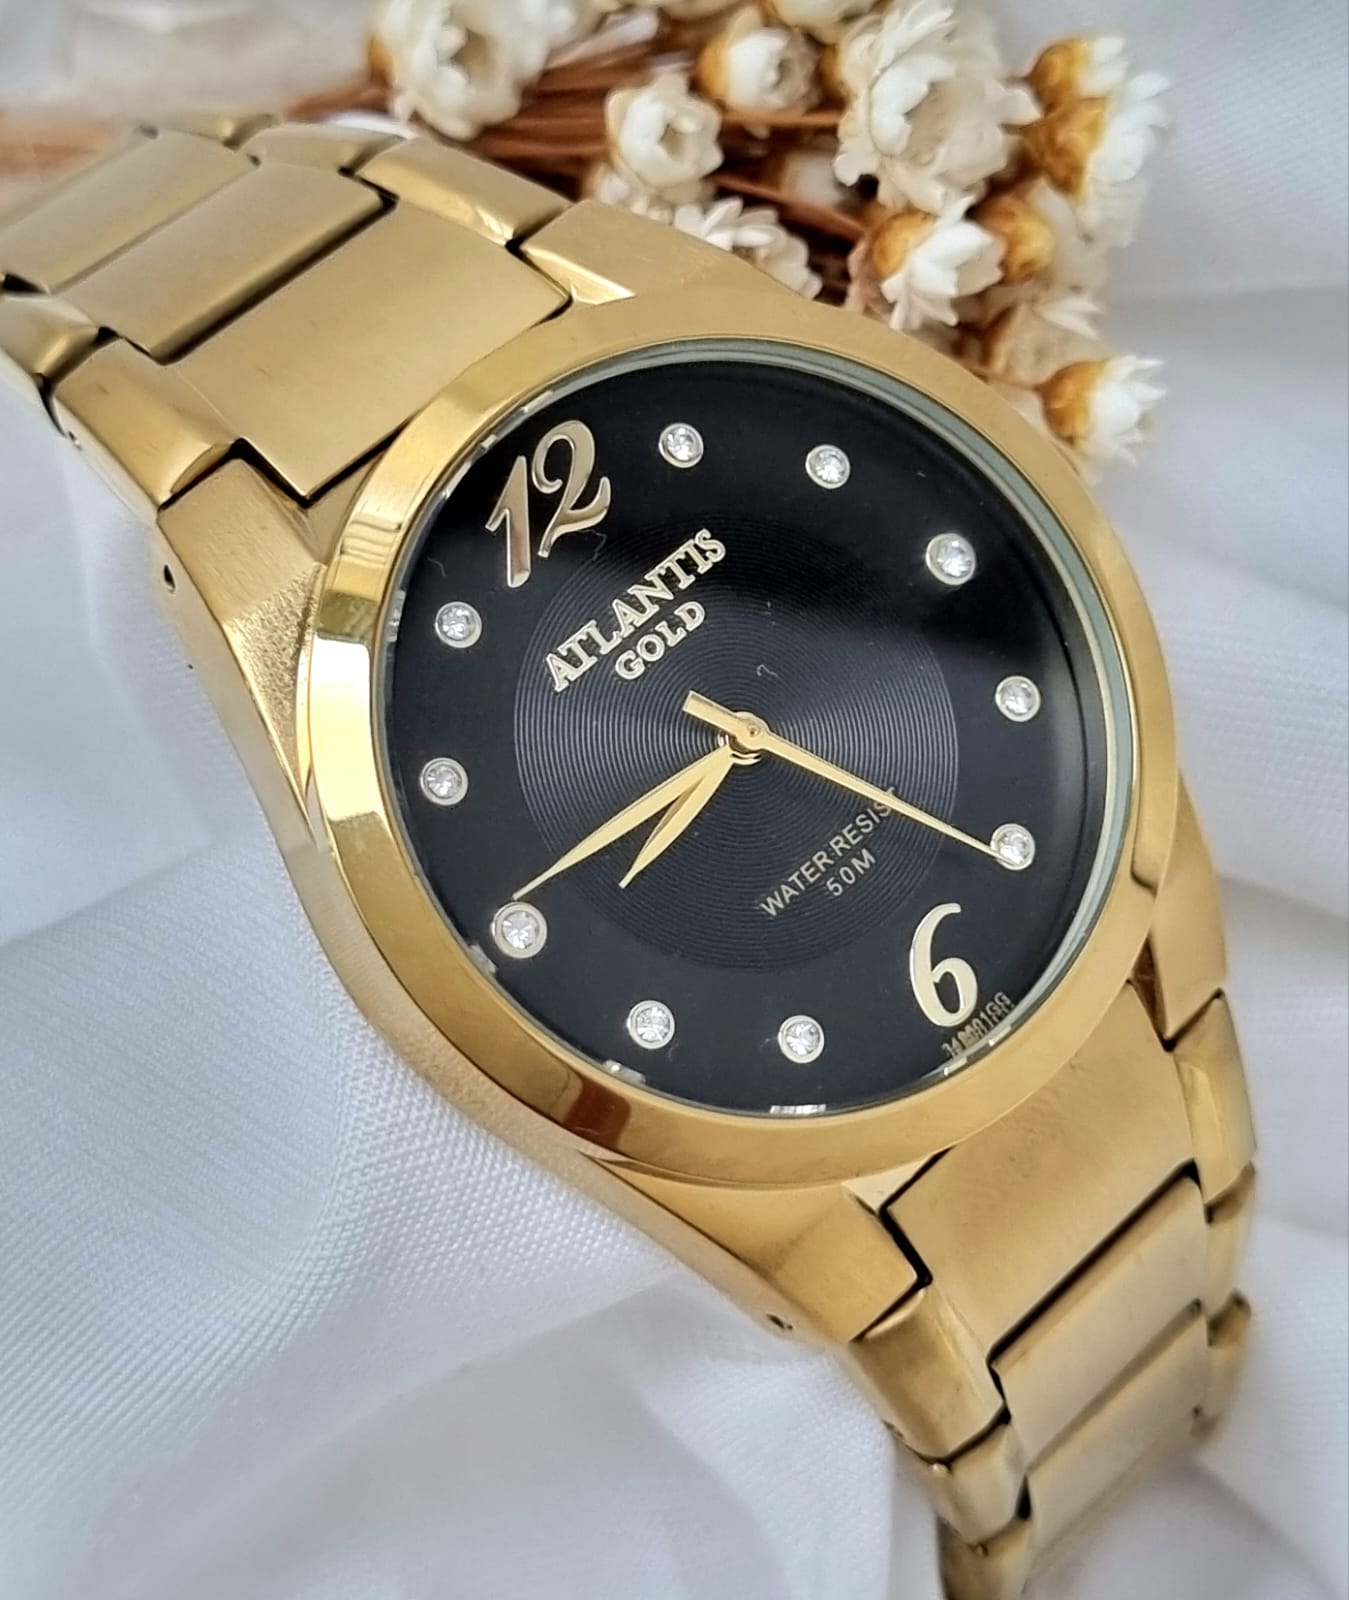 Relógio Banhado a Ouro Atlantis Gold G34963